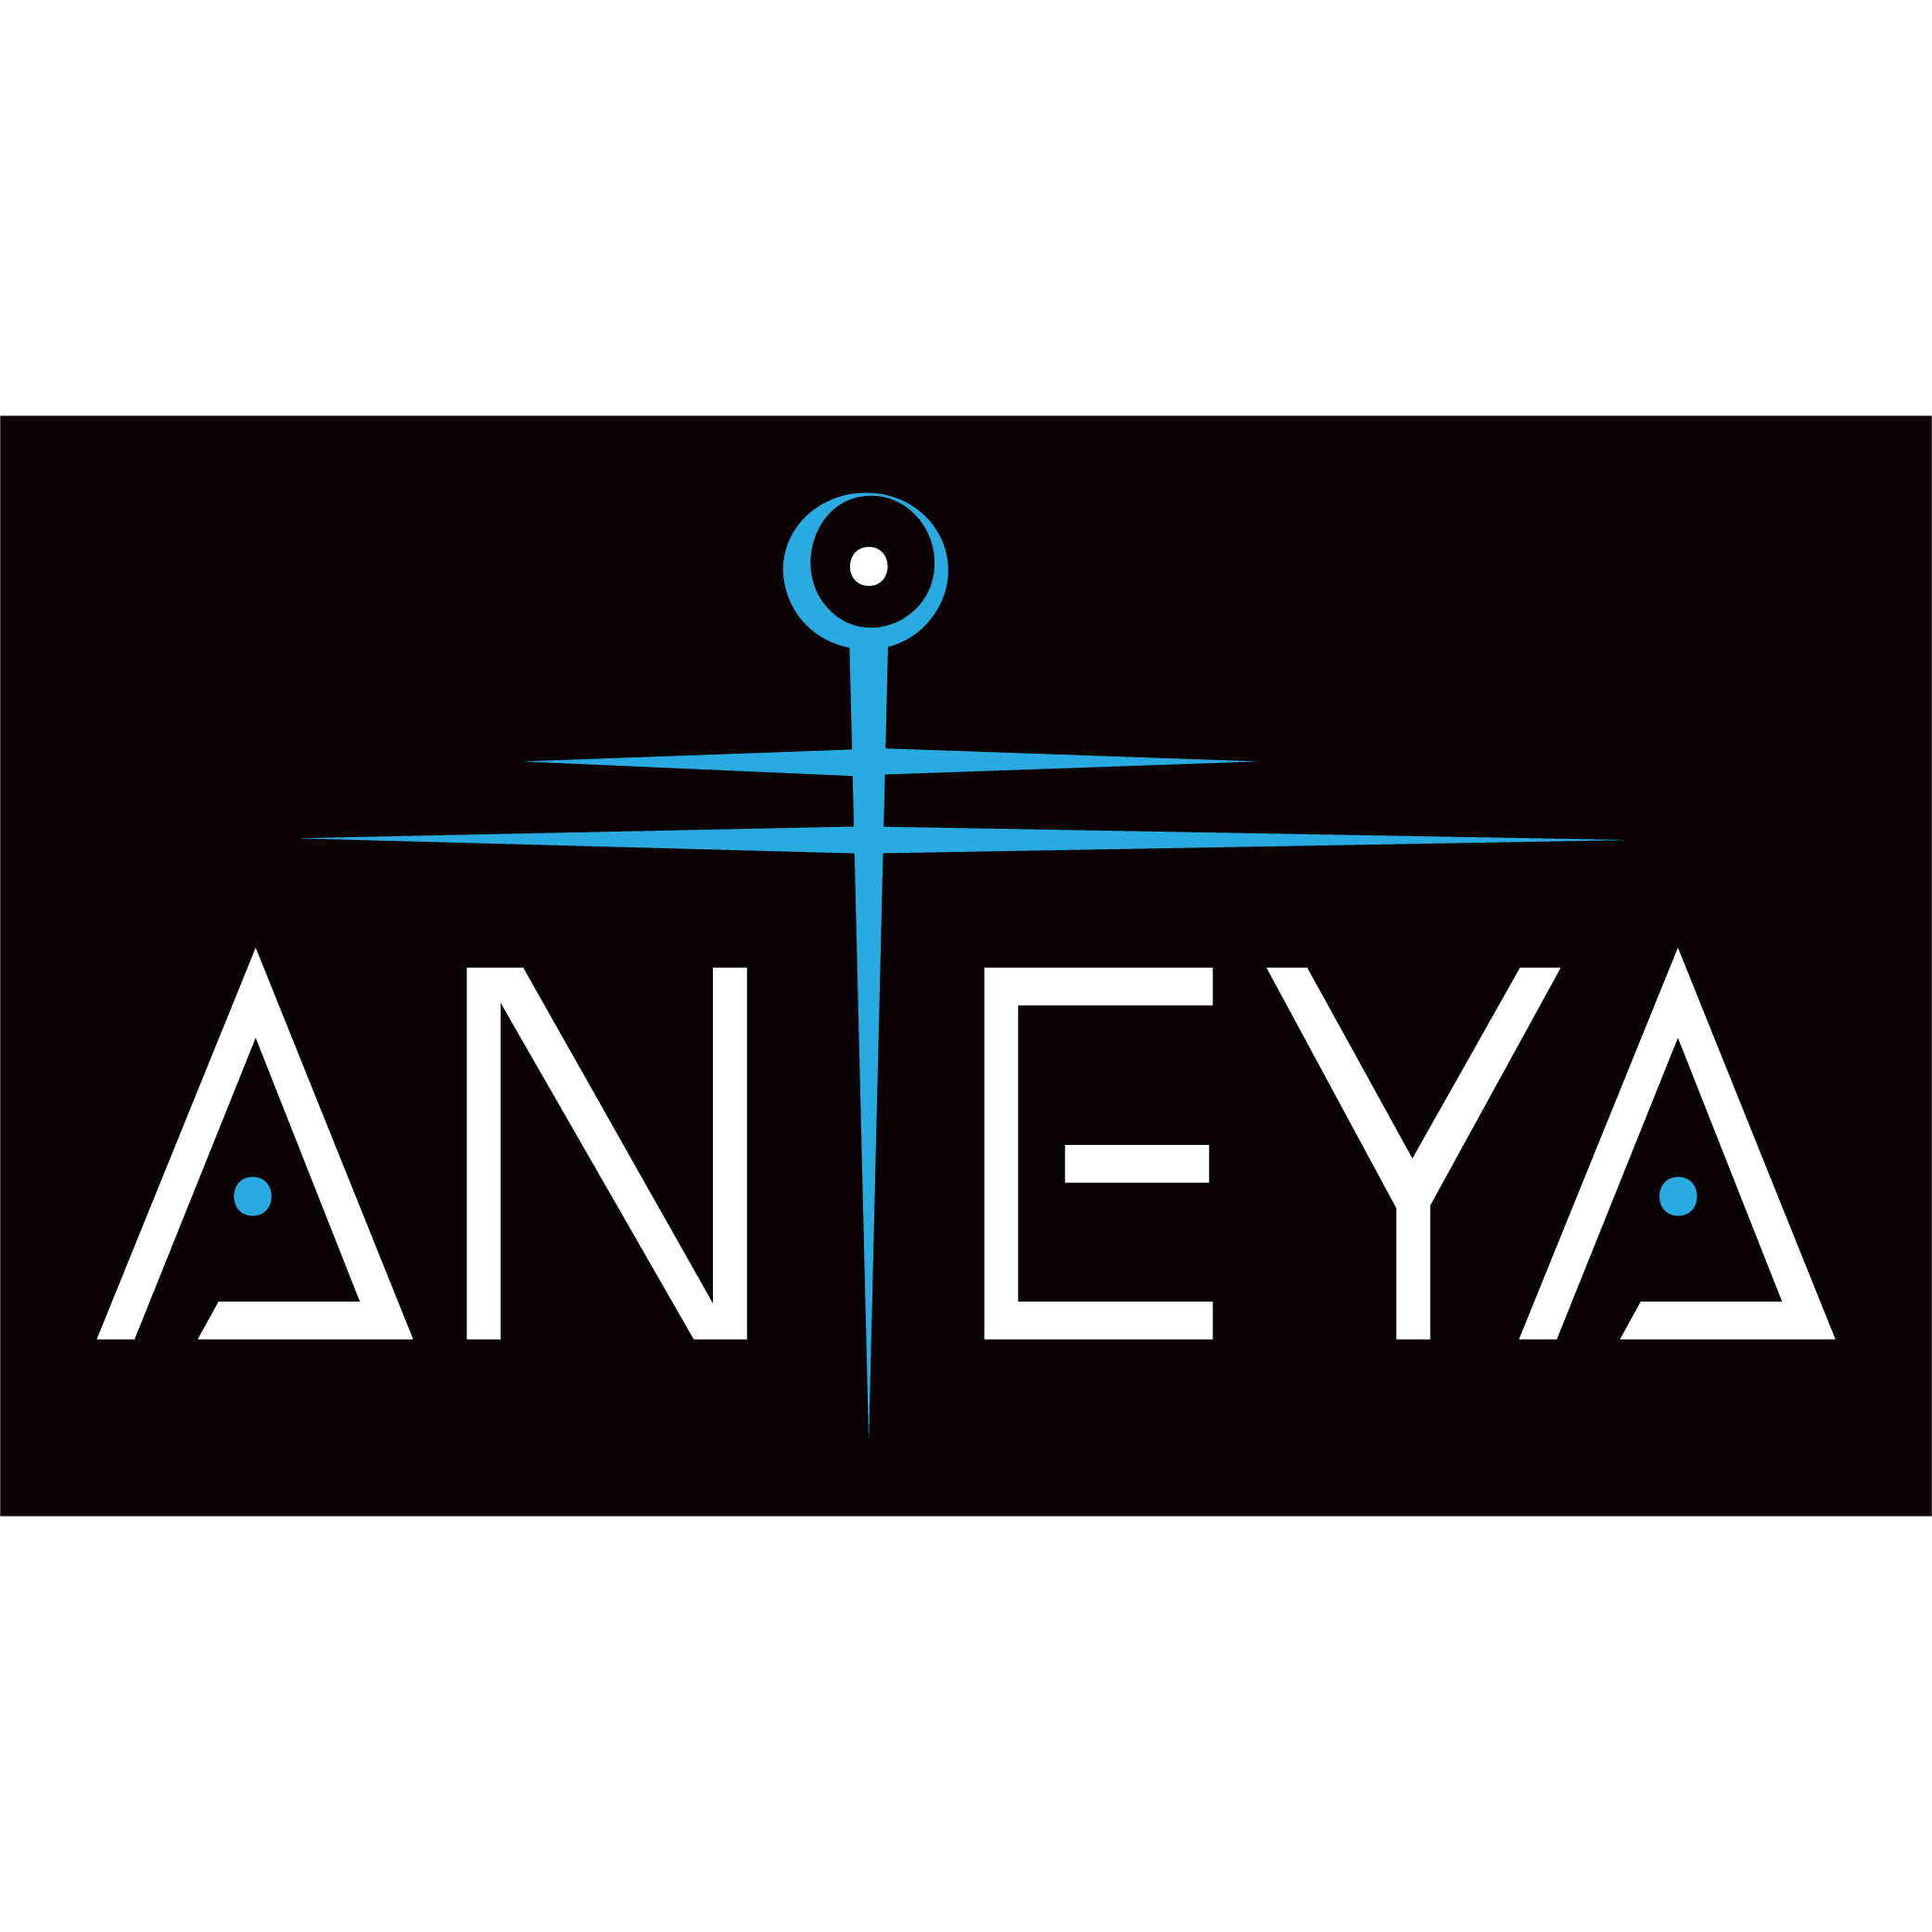 Anteya Ltd